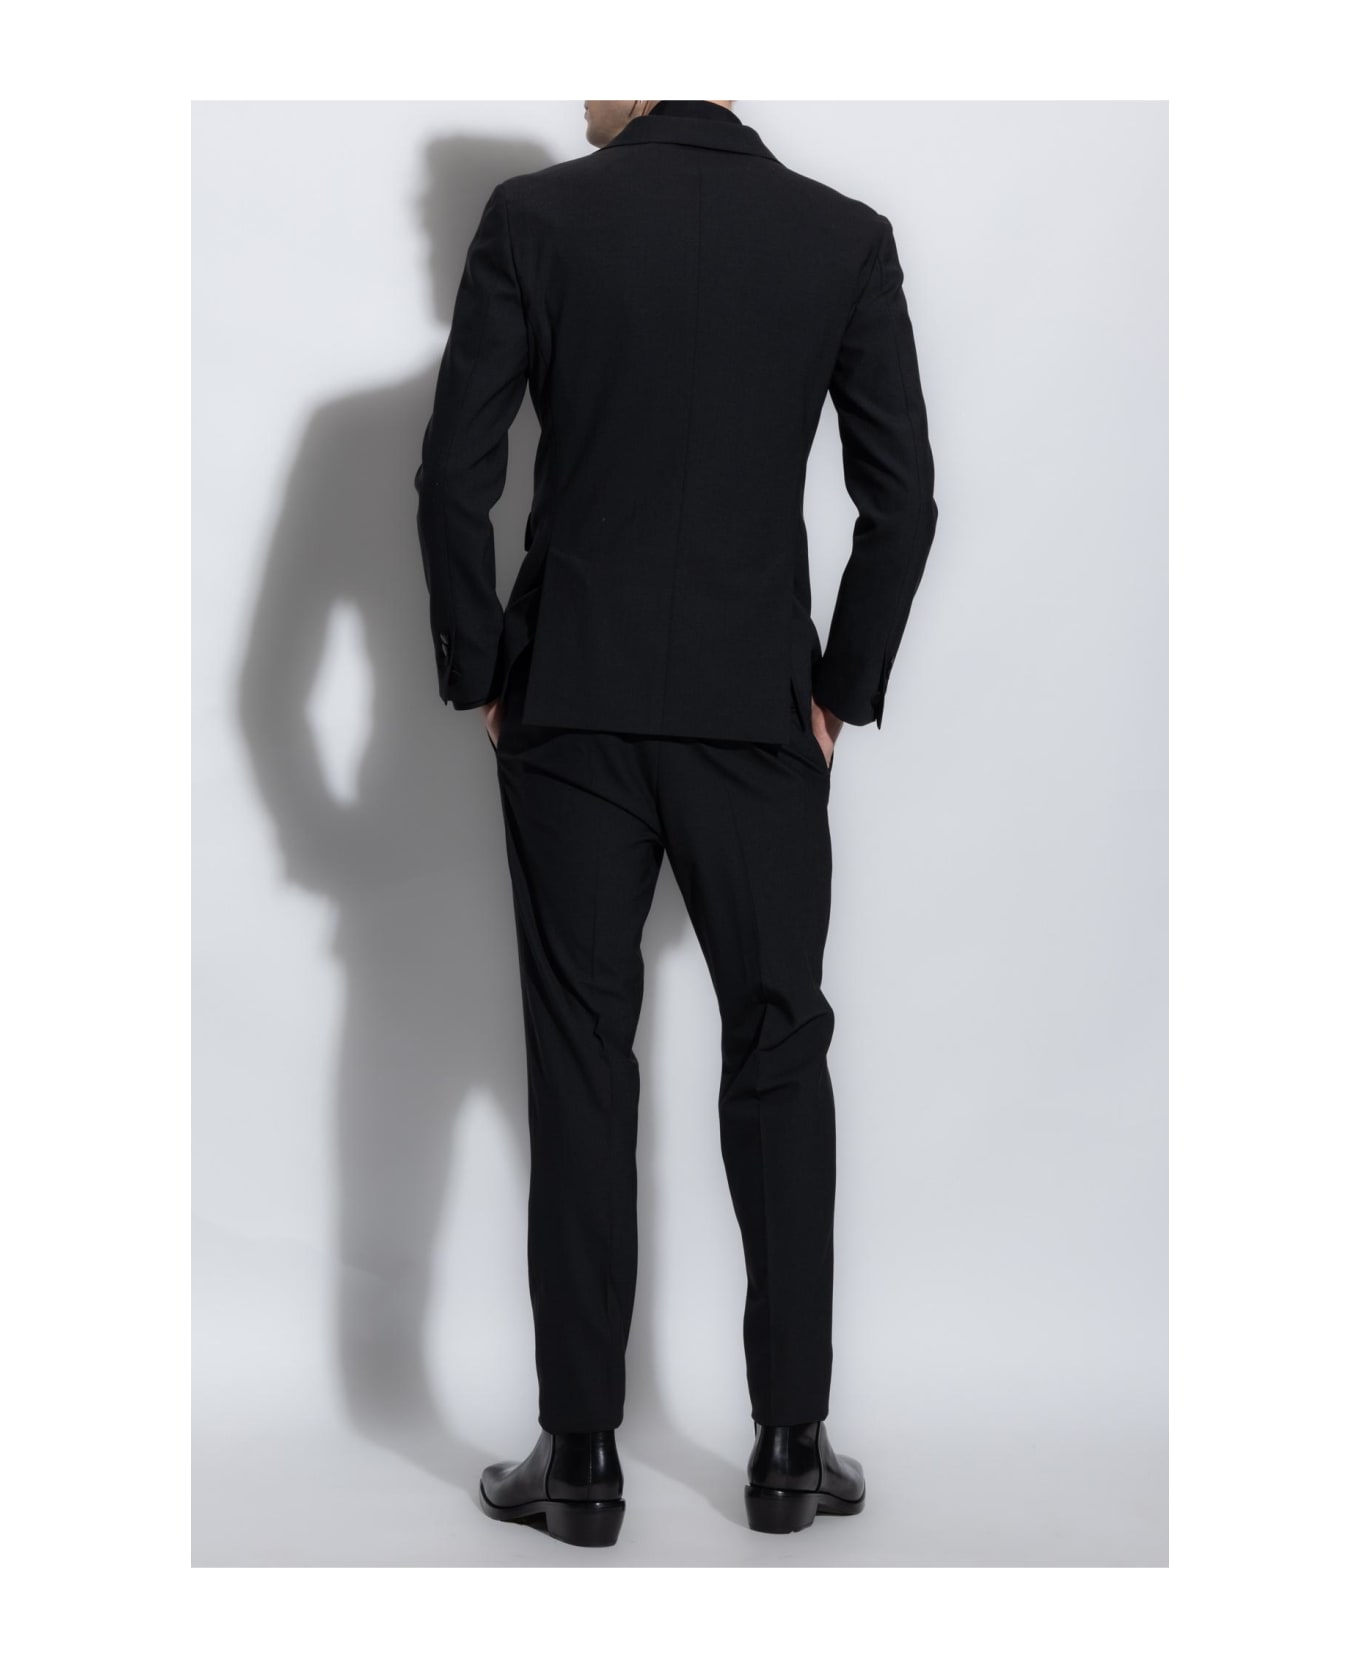 Dsquared2 Miami Tuxedo Two-piece Suit